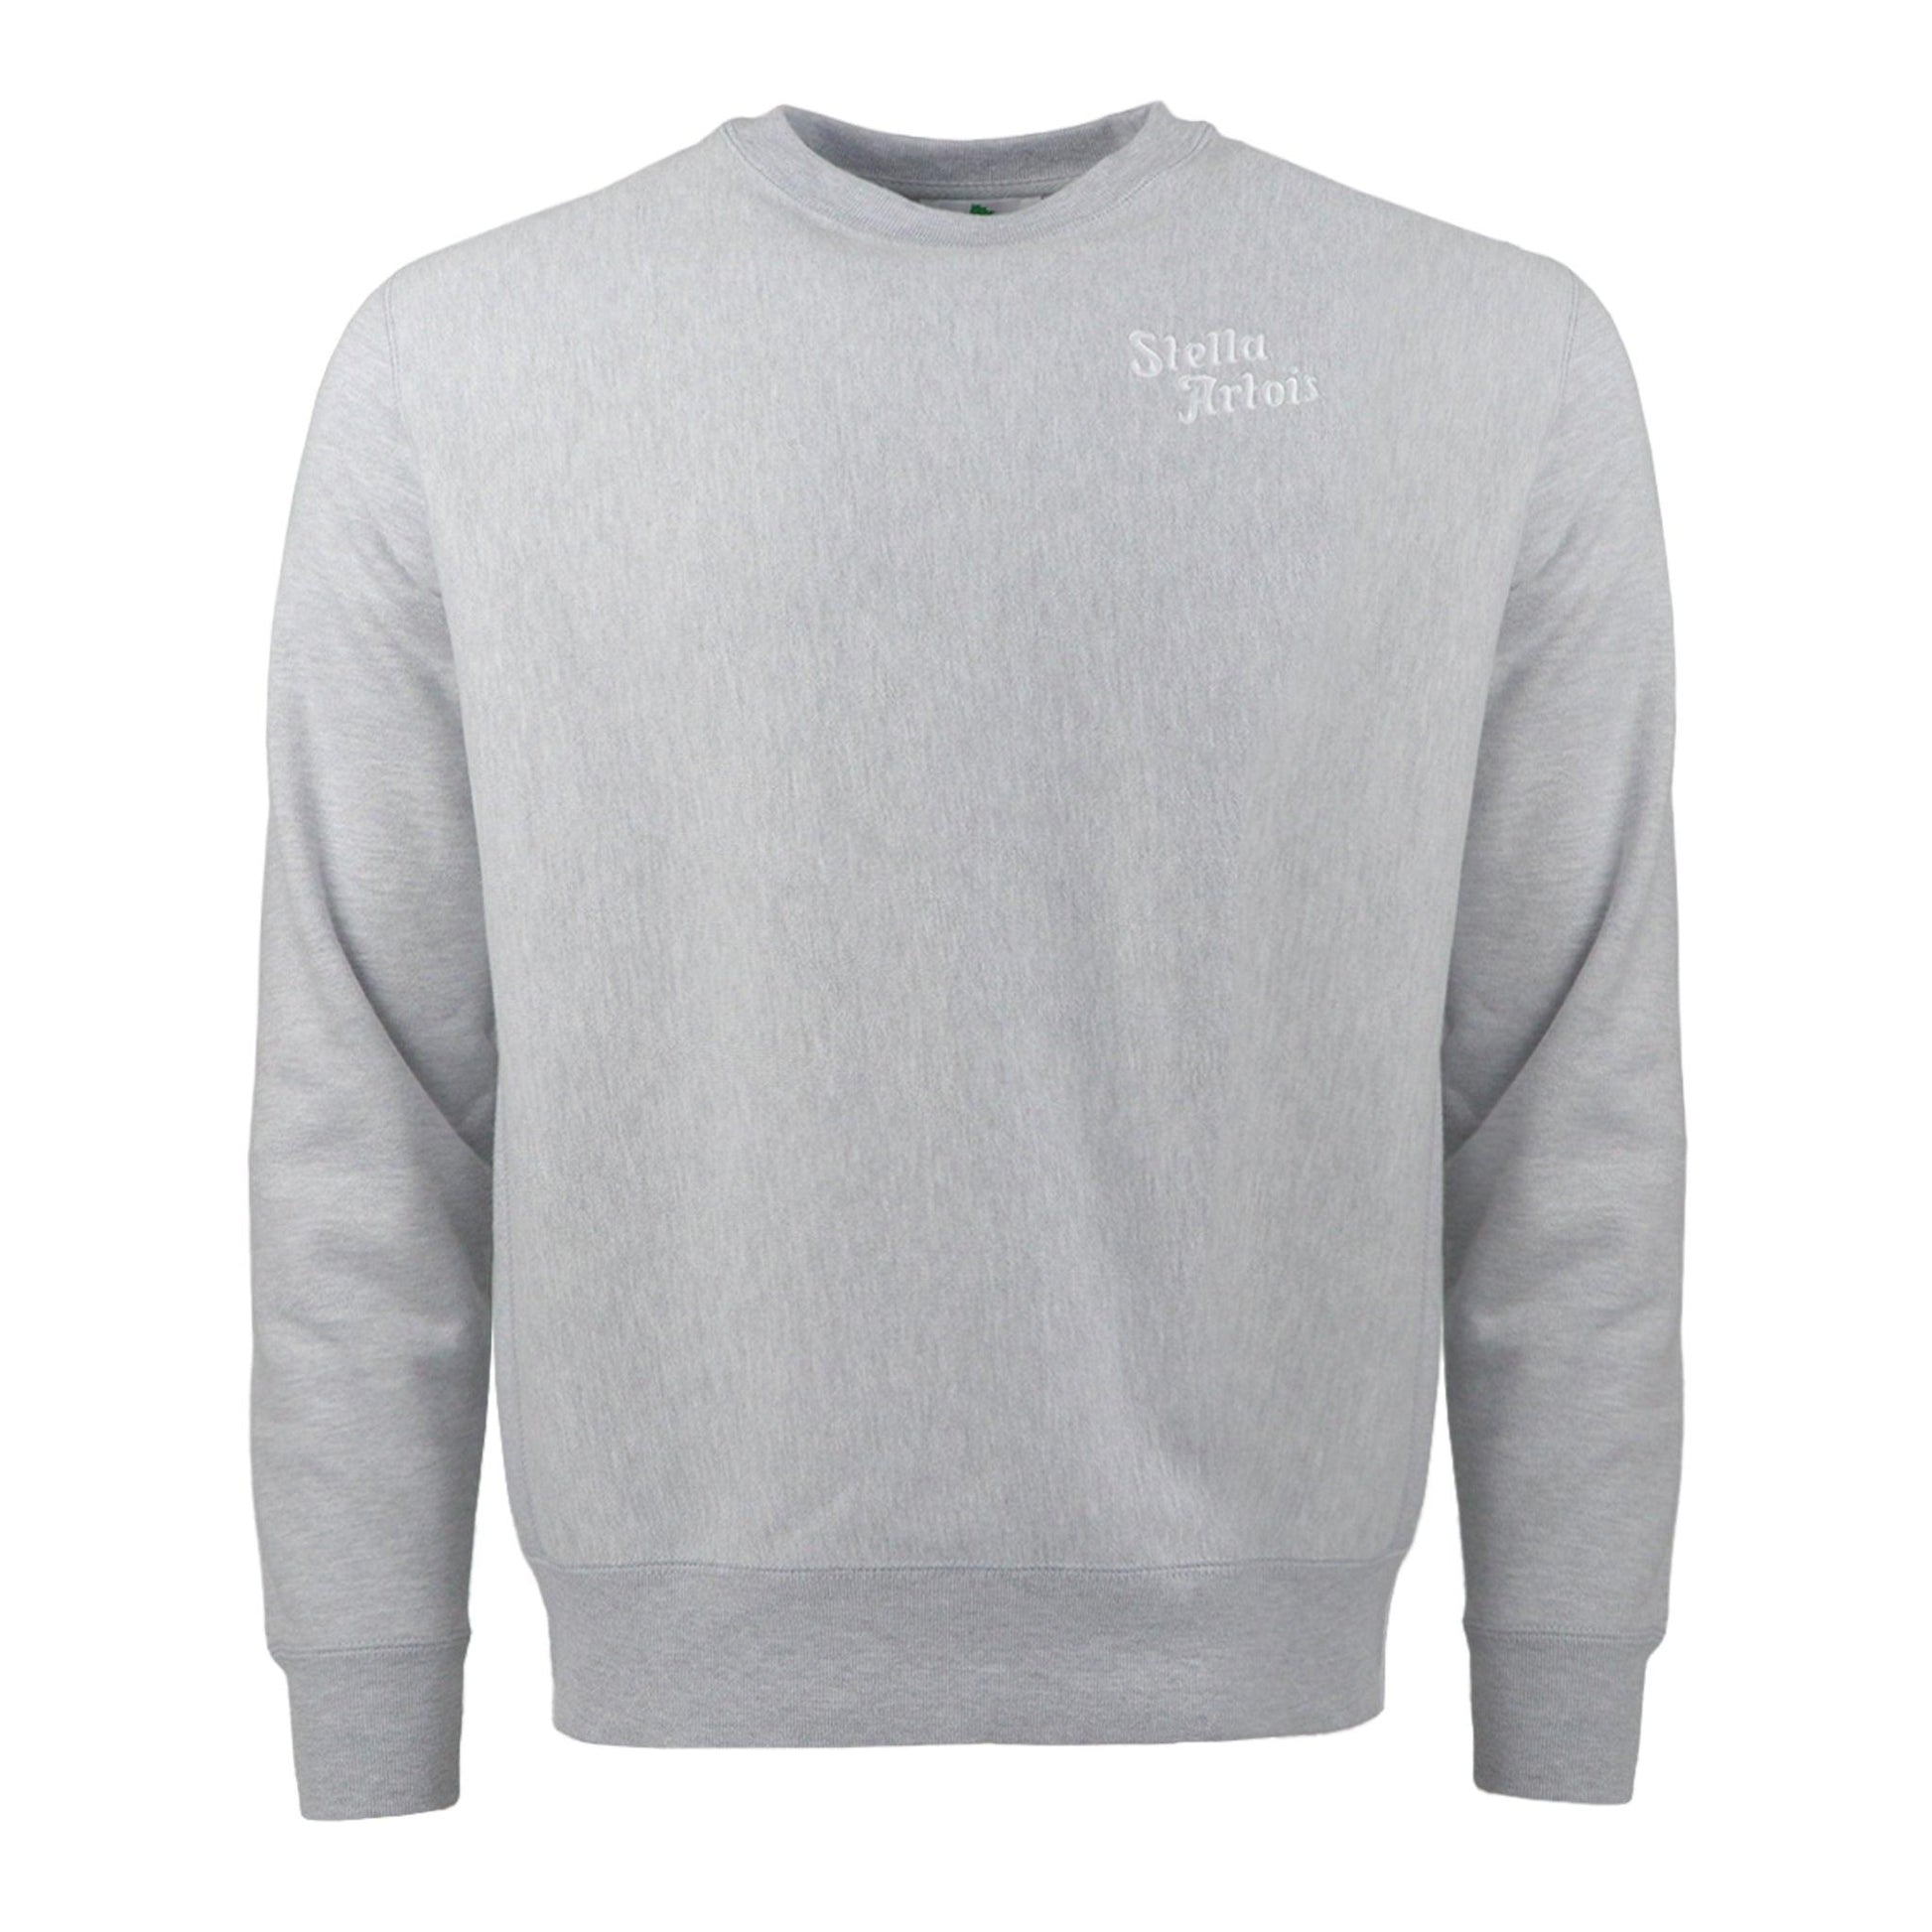 heathered gray crewneck sweatshirt with stella artois logo on front left chest of sweatshirt.